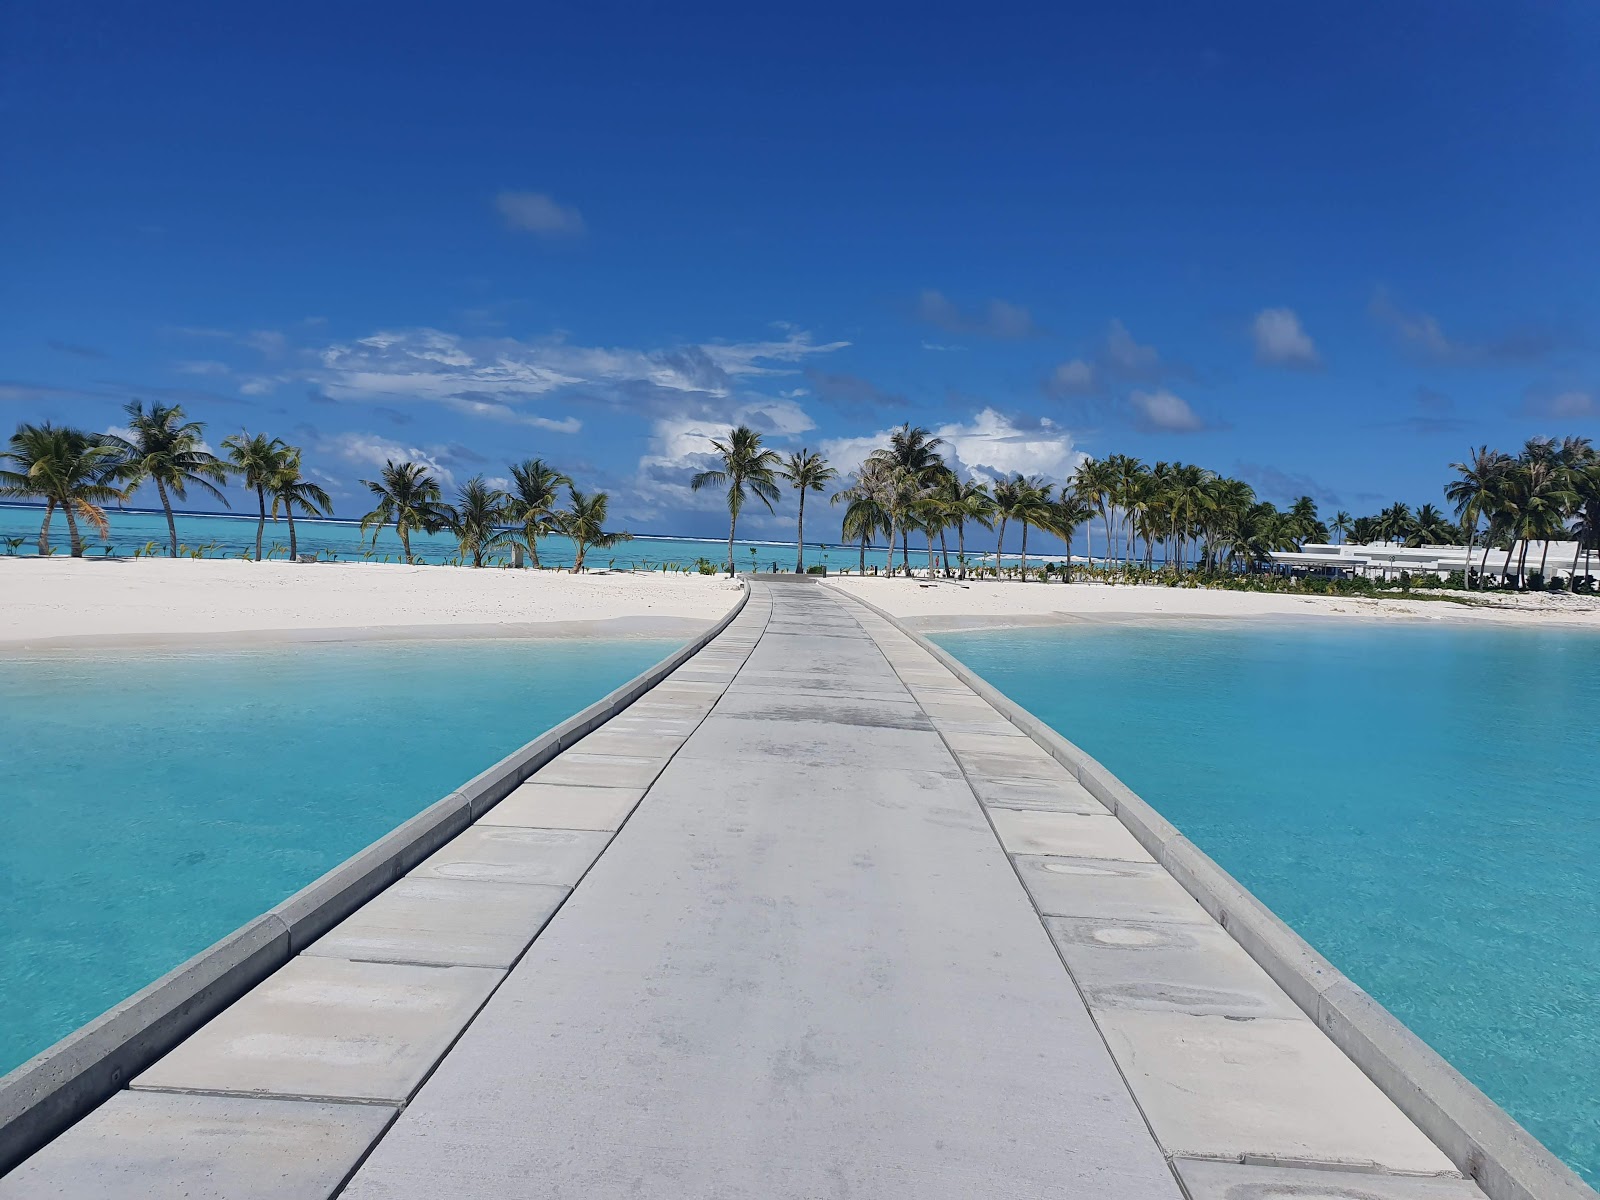 Fotografie cu Riu Resort Beach - locul popular printre cunoscătorii de relaxare